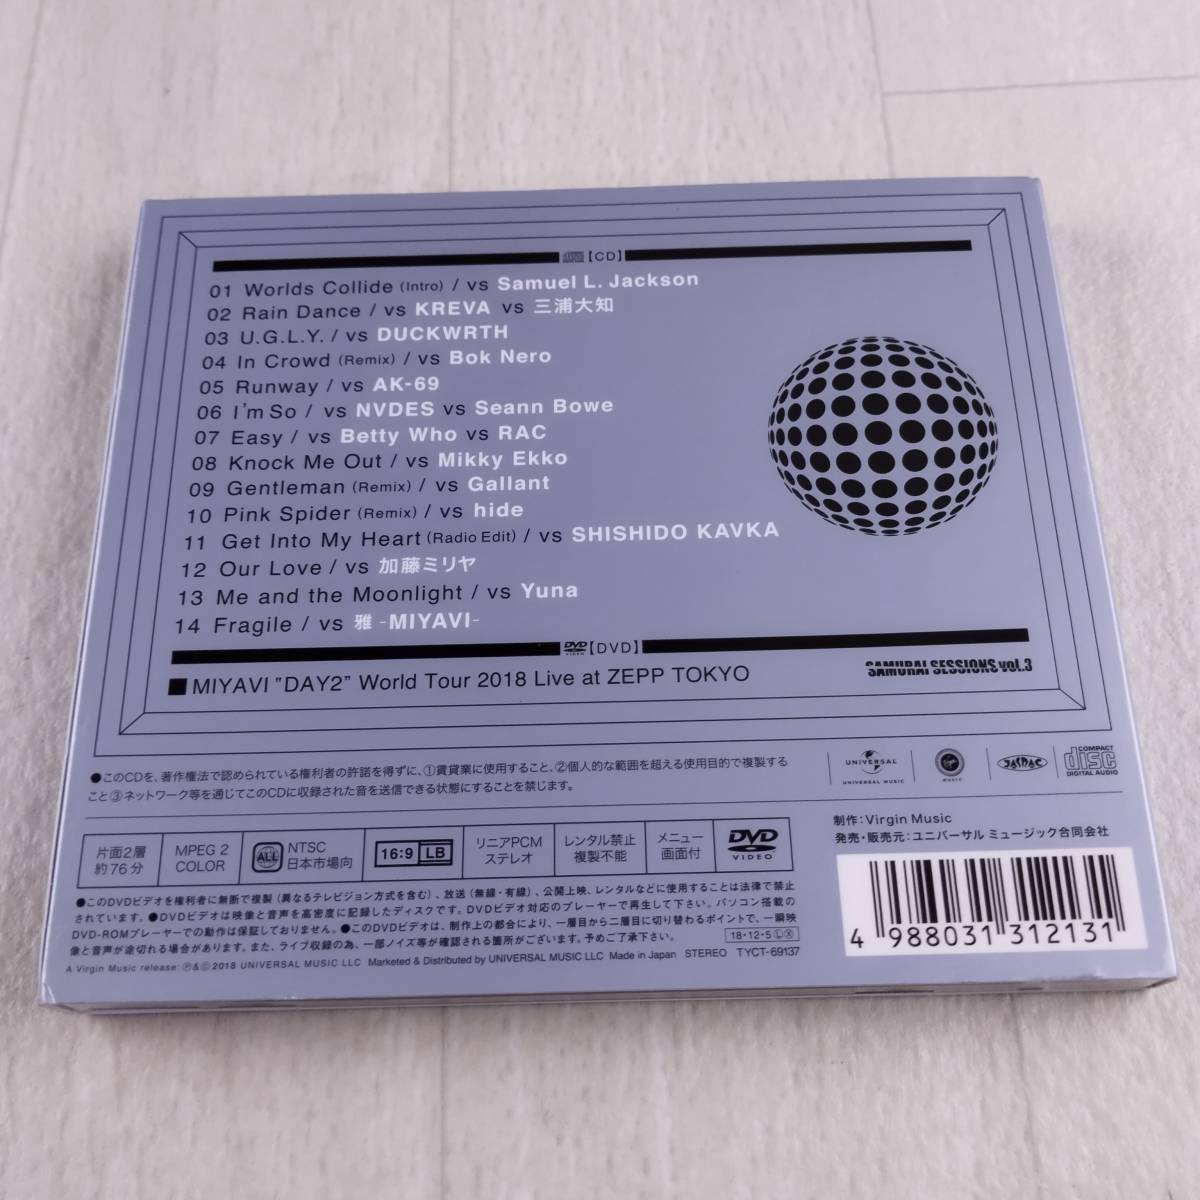 1MC9 CD MIYAVI SAMURAI SESSIONS vol.3 Worlds Collide 初回限定盤_画像2